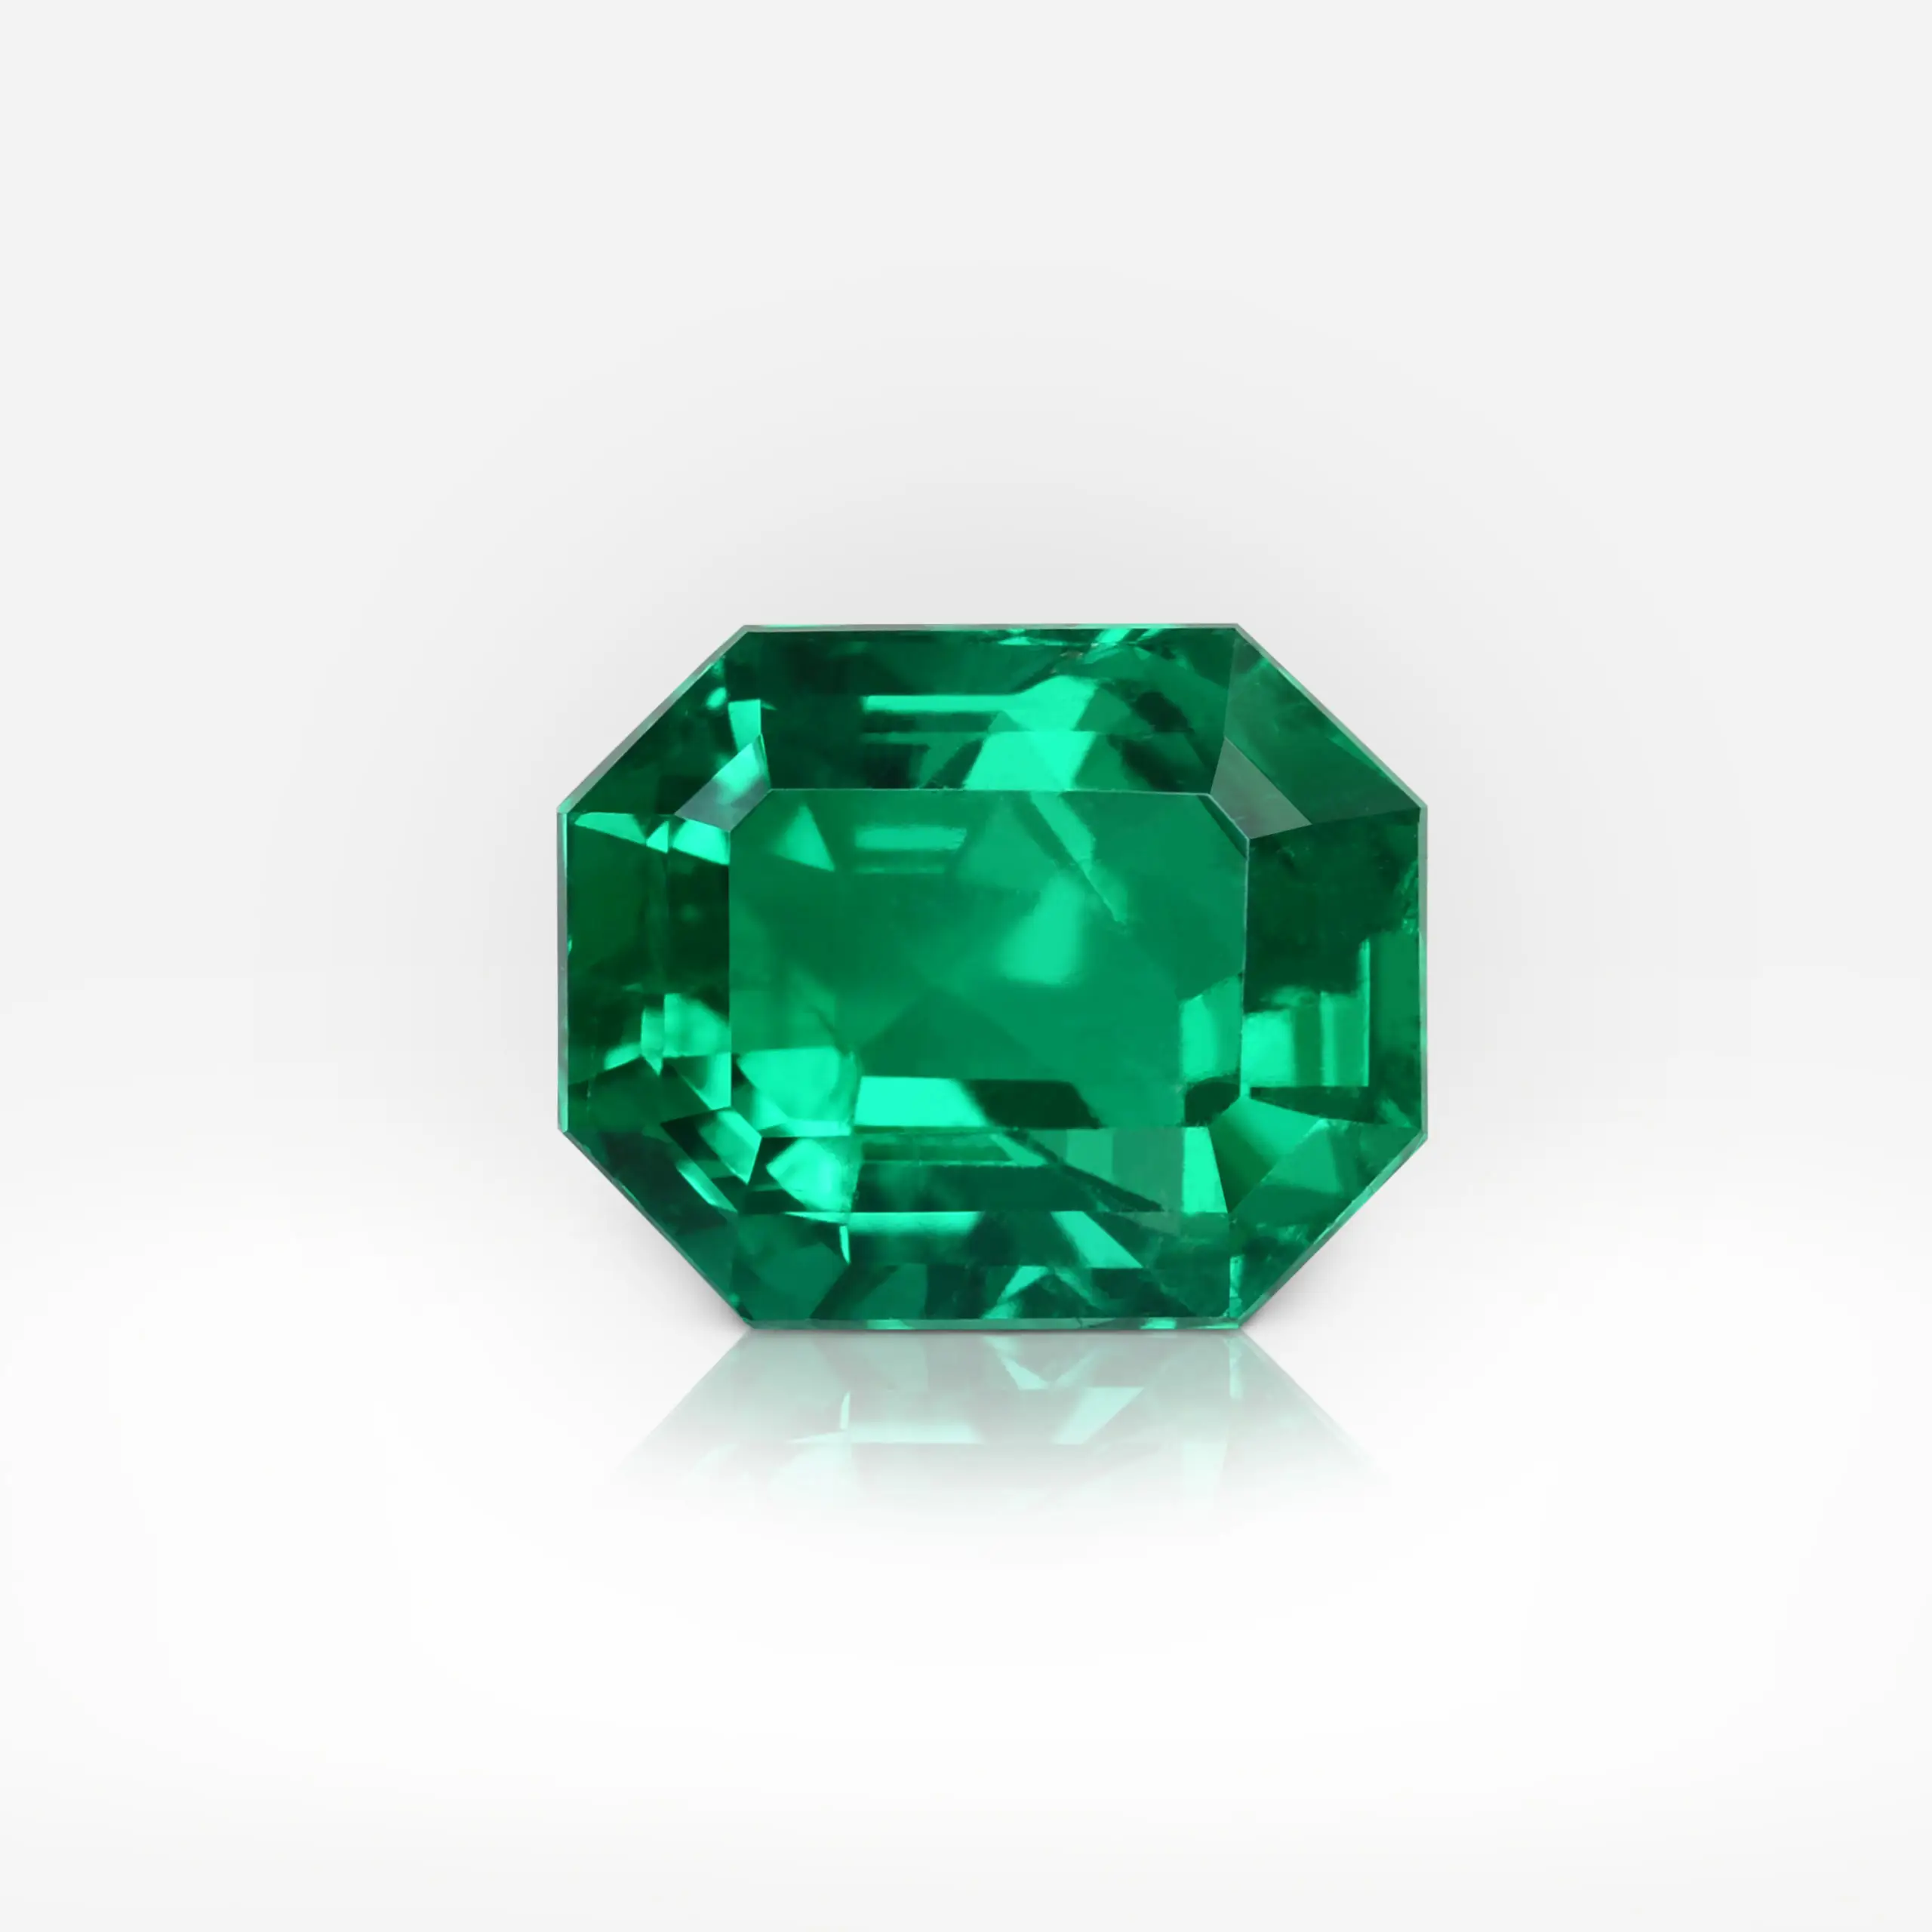 2.74 carat Octagonal Shape Vivid Green Colombian Emerald GRS - picture 1